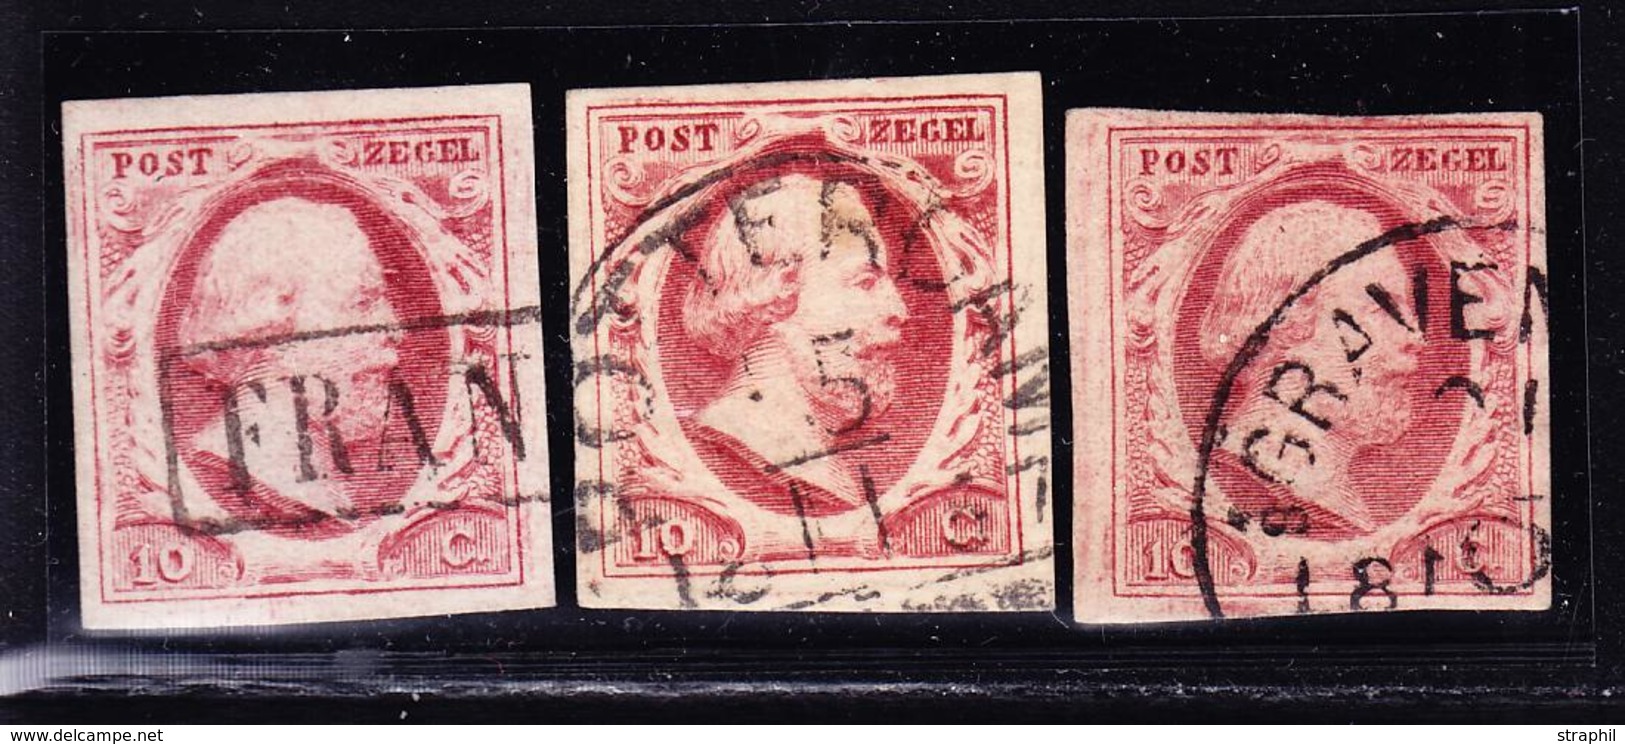 O N°2 (x3) -  Nuances  - TB - Unused Stamps